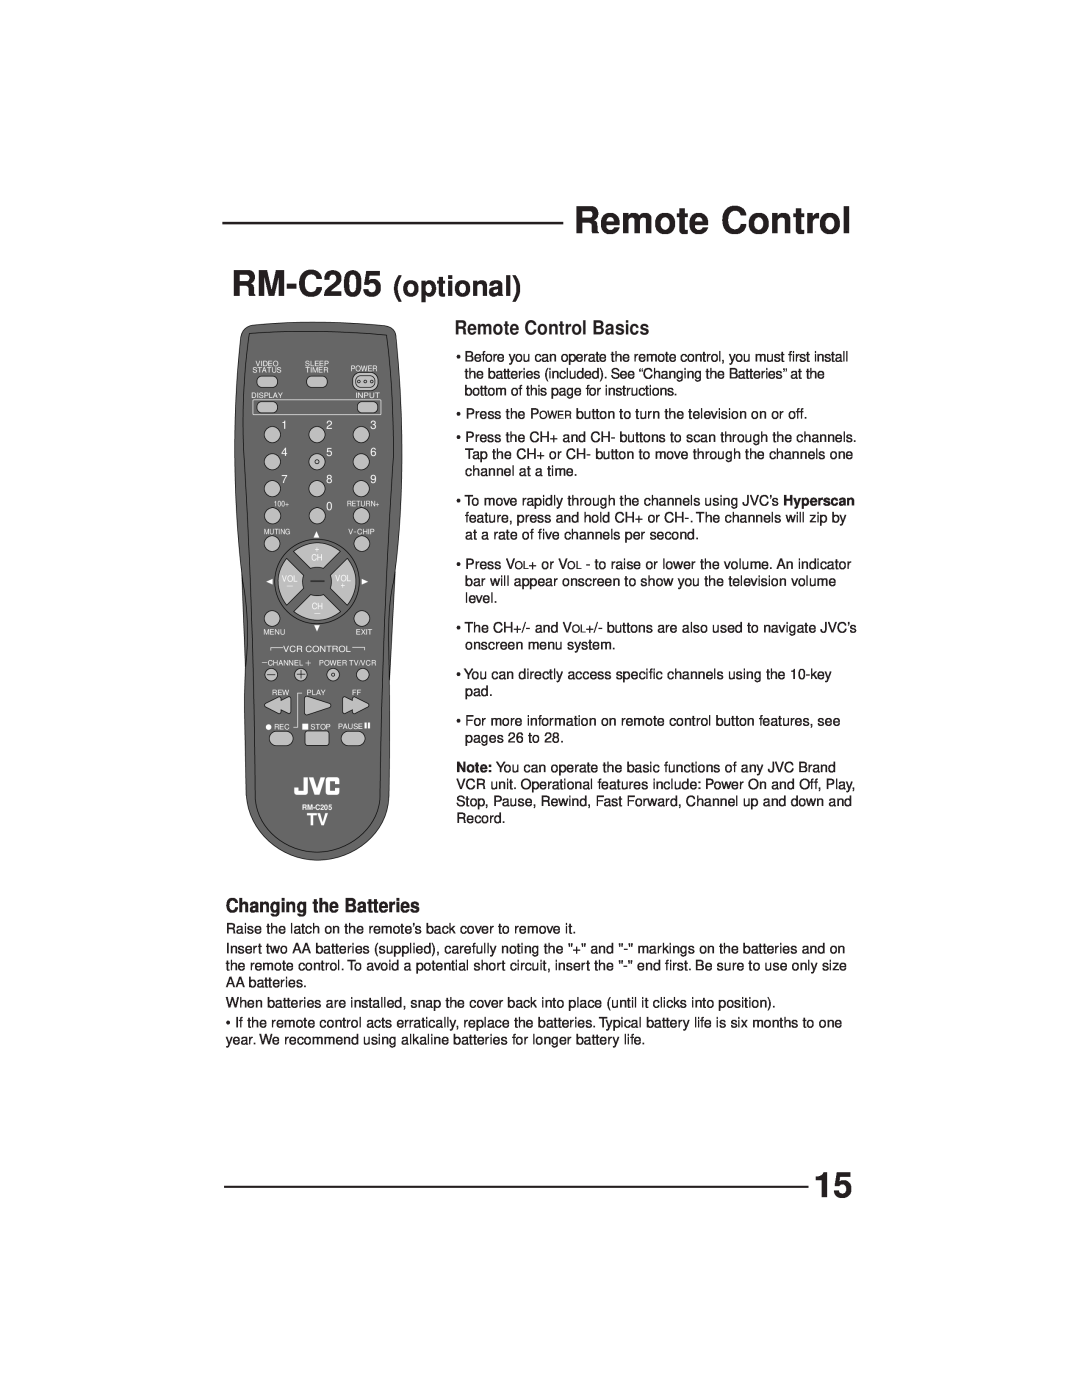 JVC AV-27GFH manual RM-C205, optional, Remote Control Basics, Changing the Batteries 